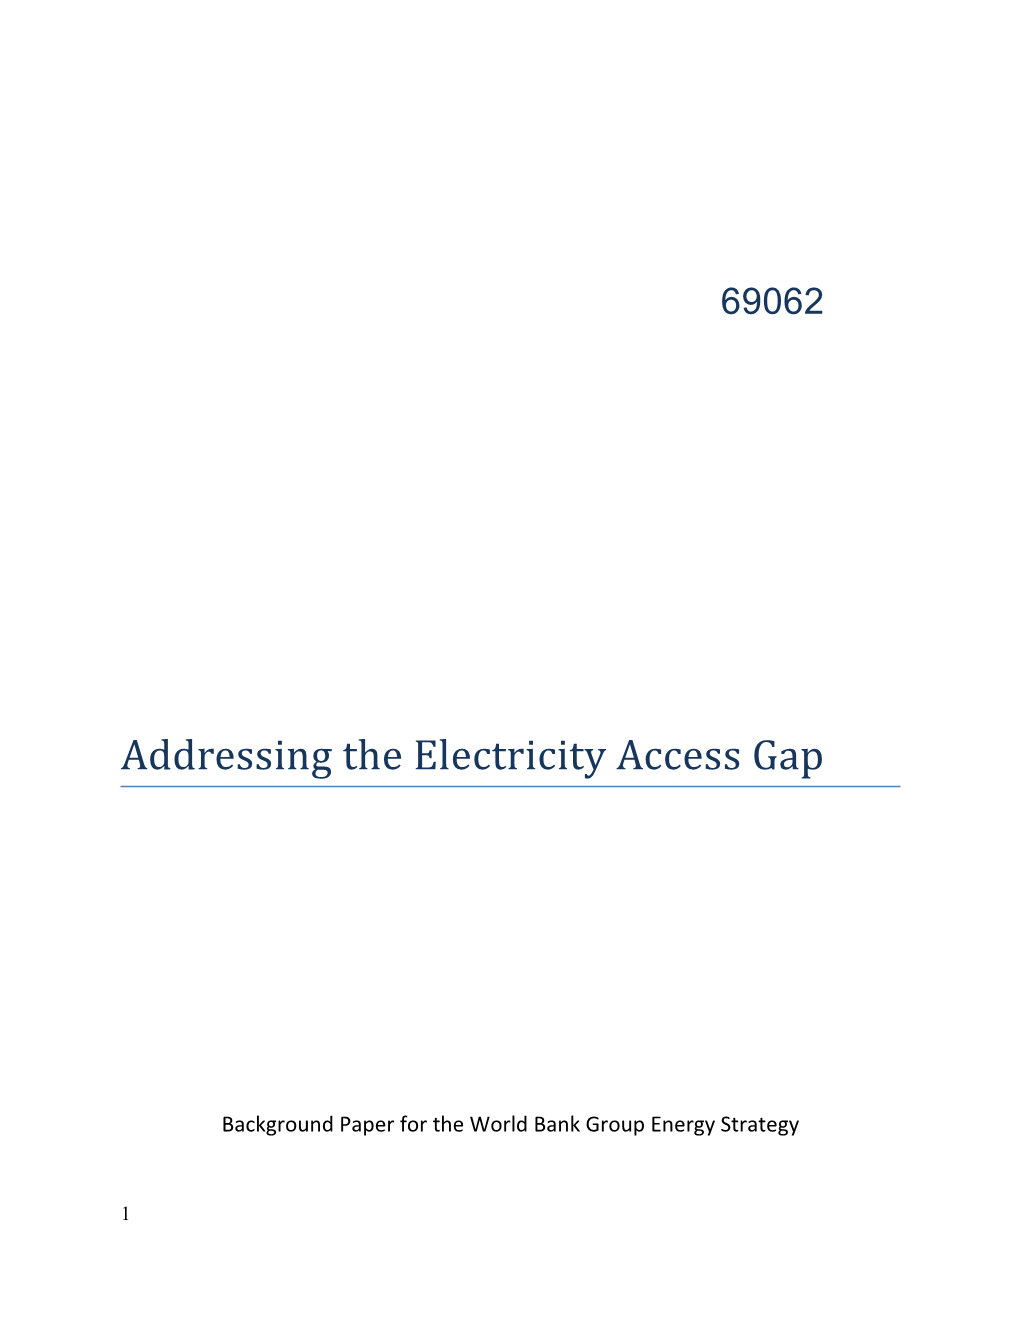 Addressing the Access Gap - Draft Report